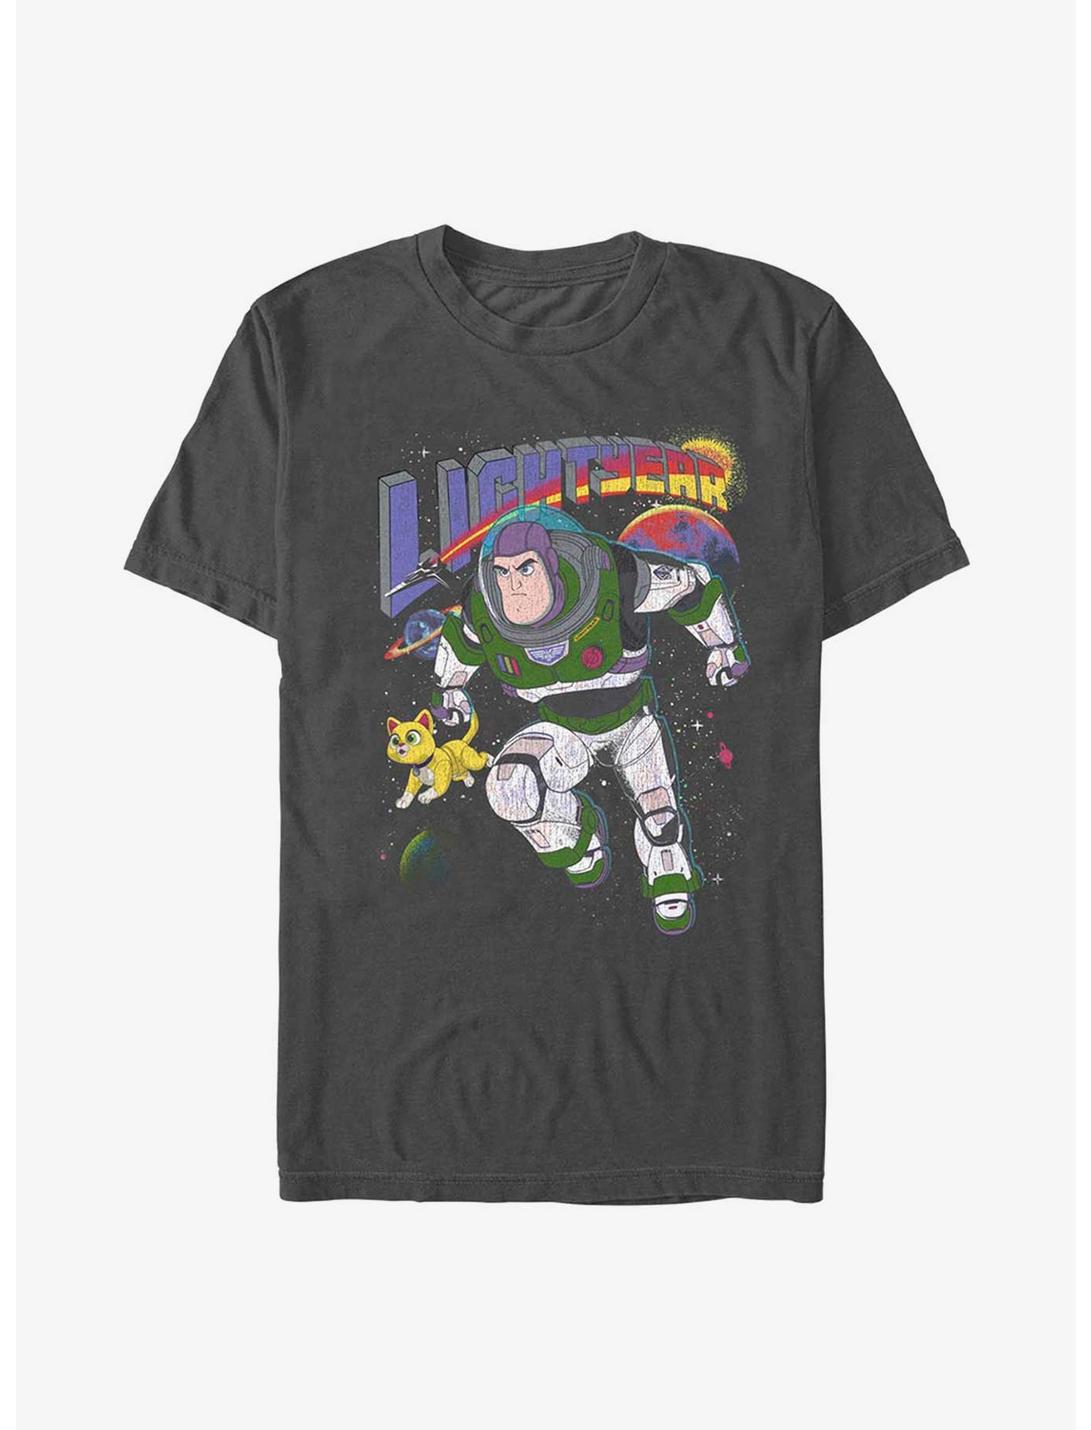 Disney Pixar Lightyear Space Ranger T-Shirt, CHARCOAL, hi-res